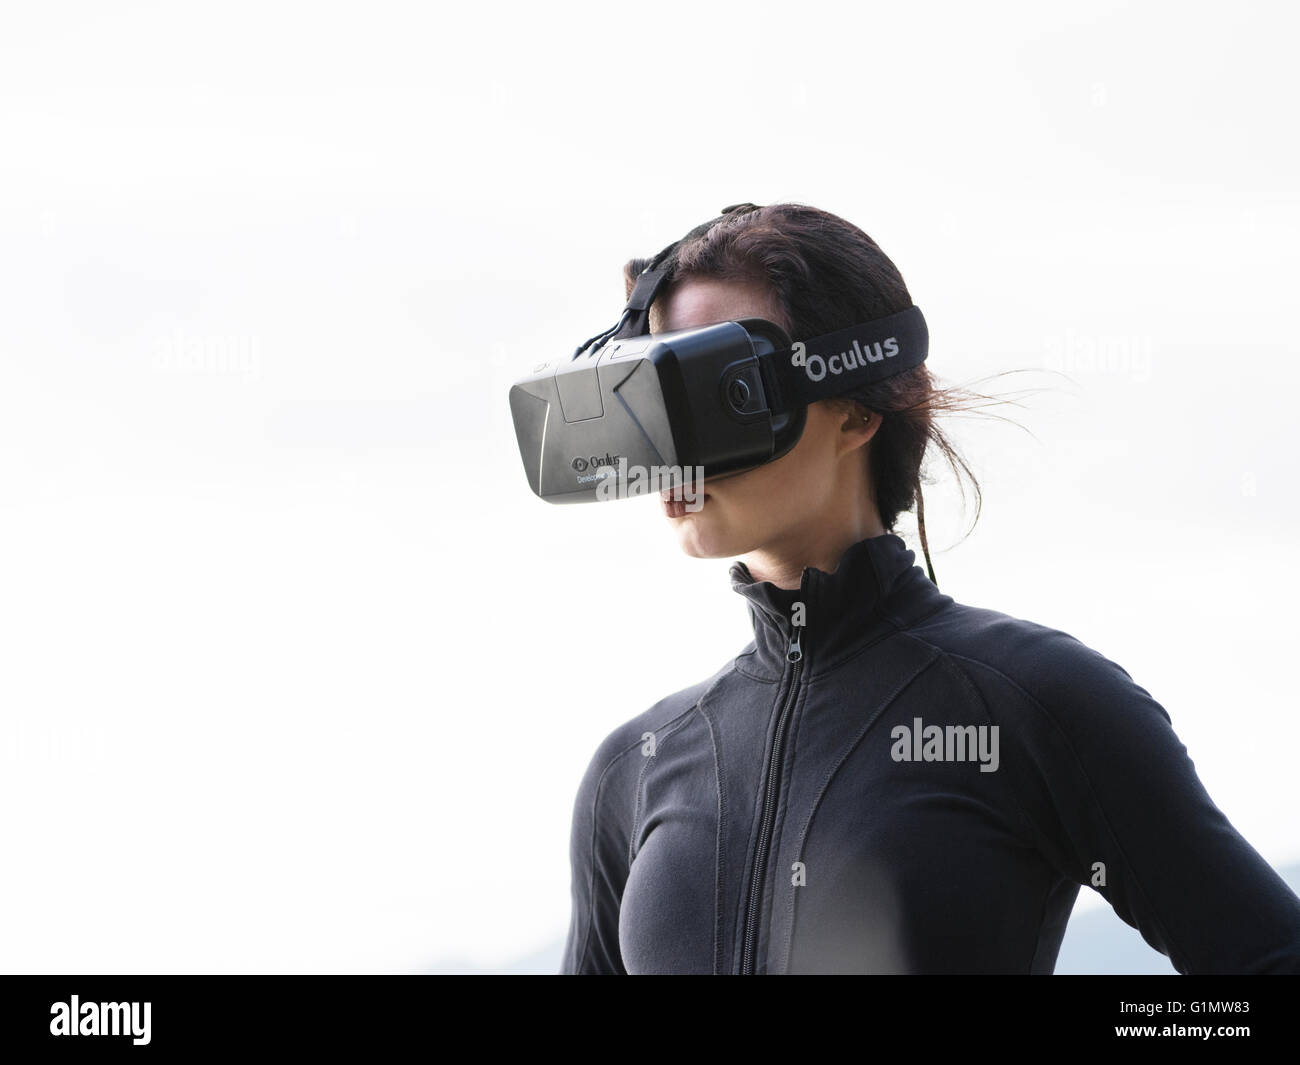 Young Caucasian woman wearing Oculus Rift virtual reality headset, Development Kit 2 version Stock Photo